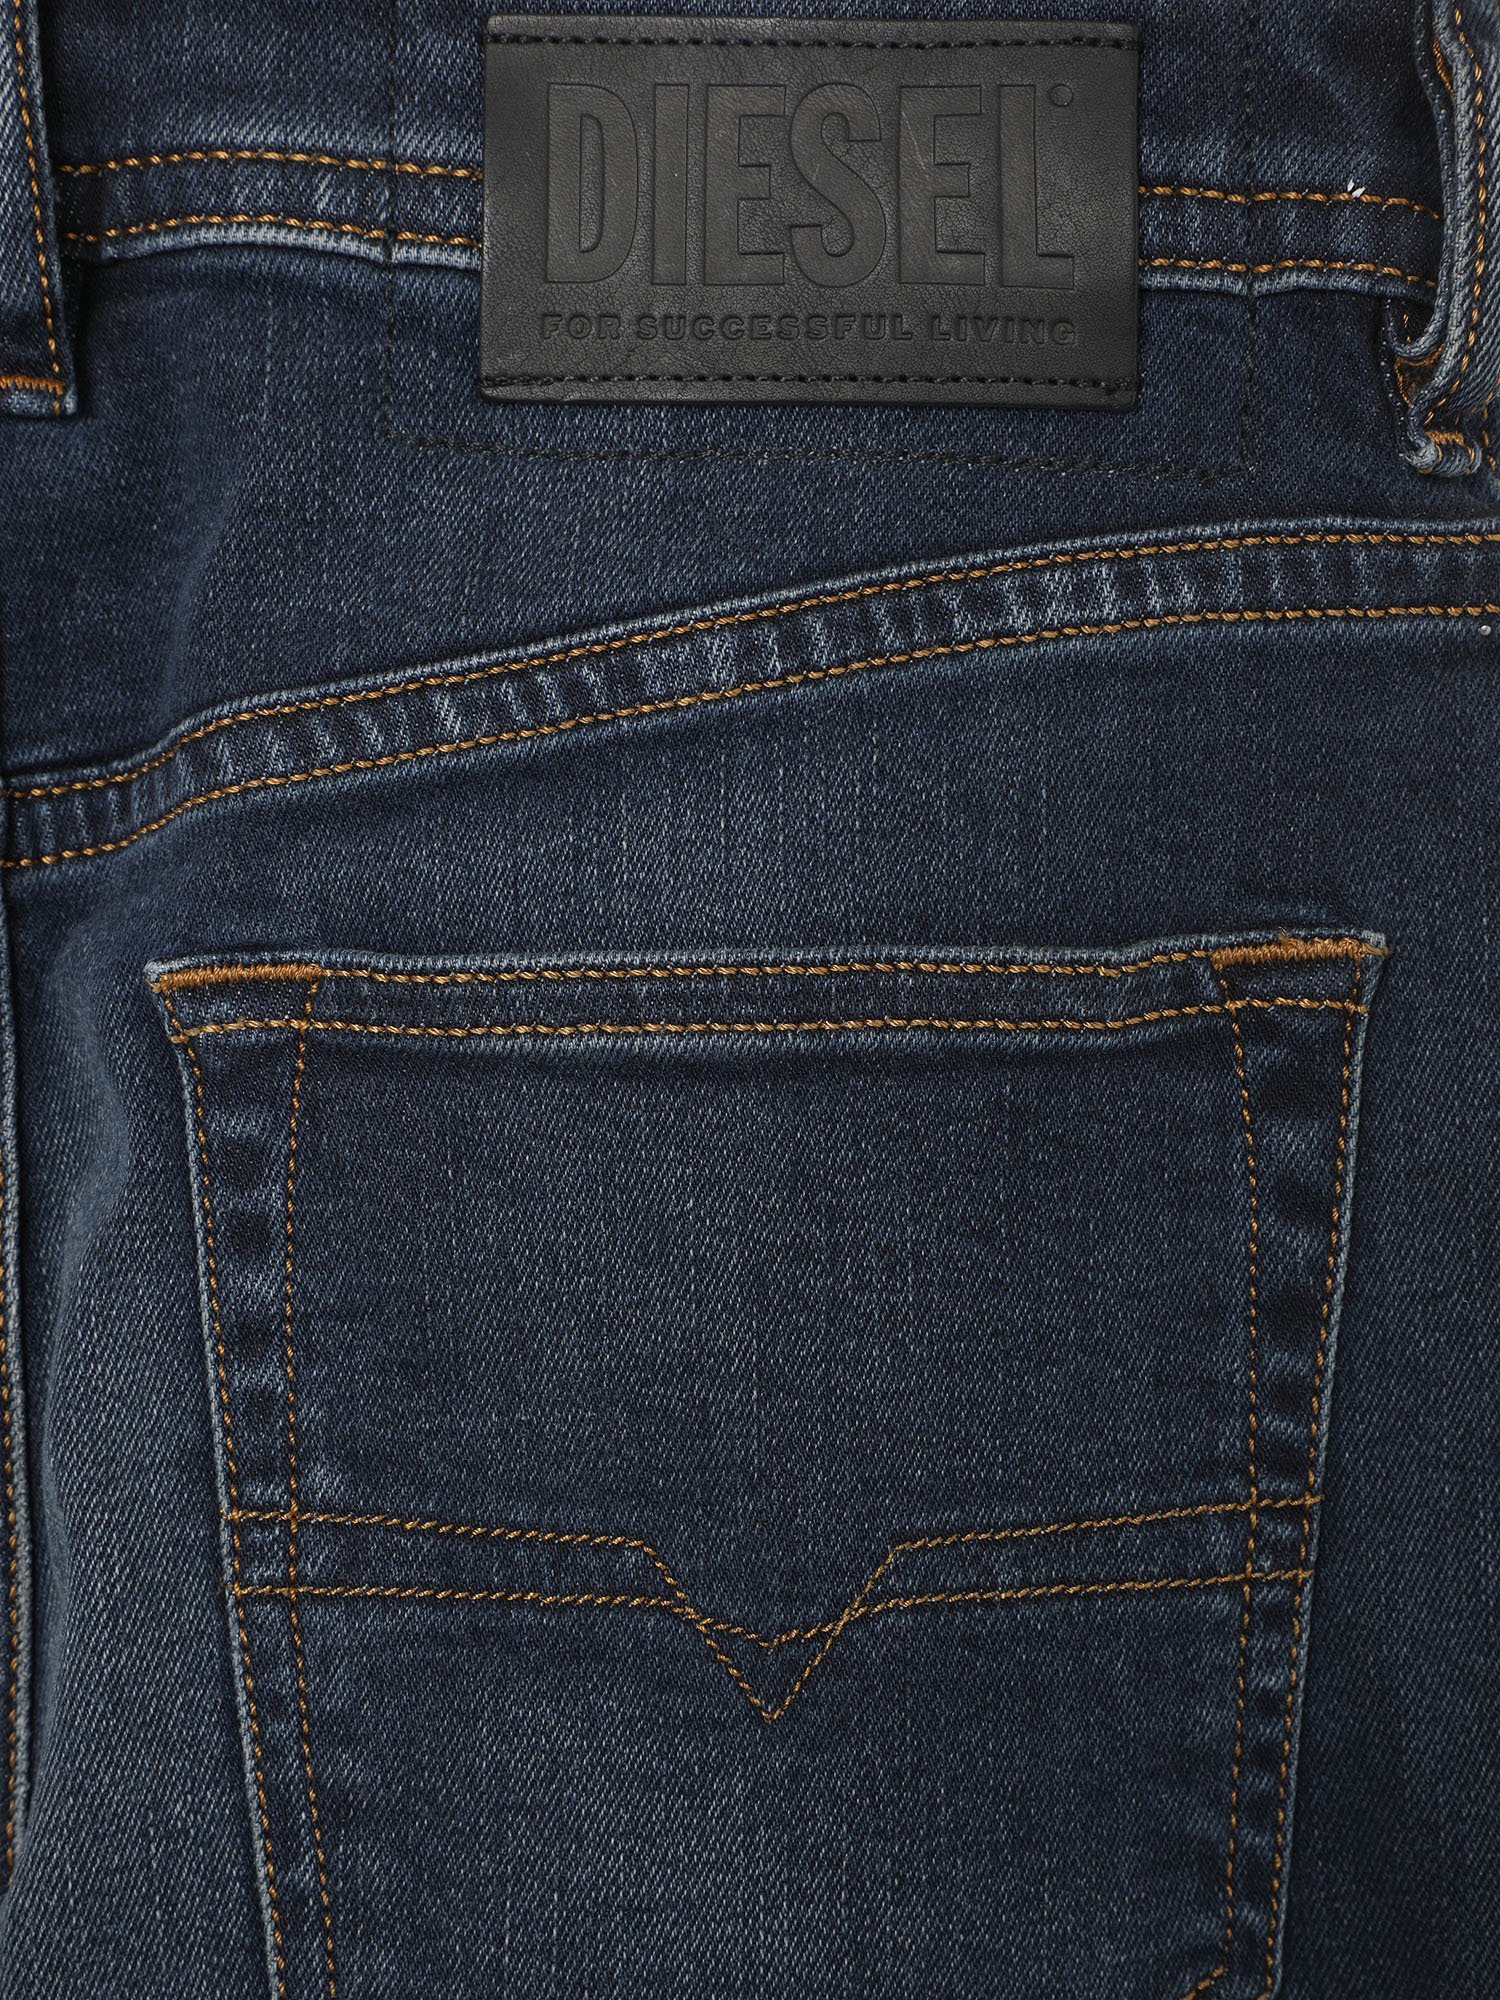 Buster Slim Jeans 009MA: Dark Blue Wash, Treated, Stretch Fabric